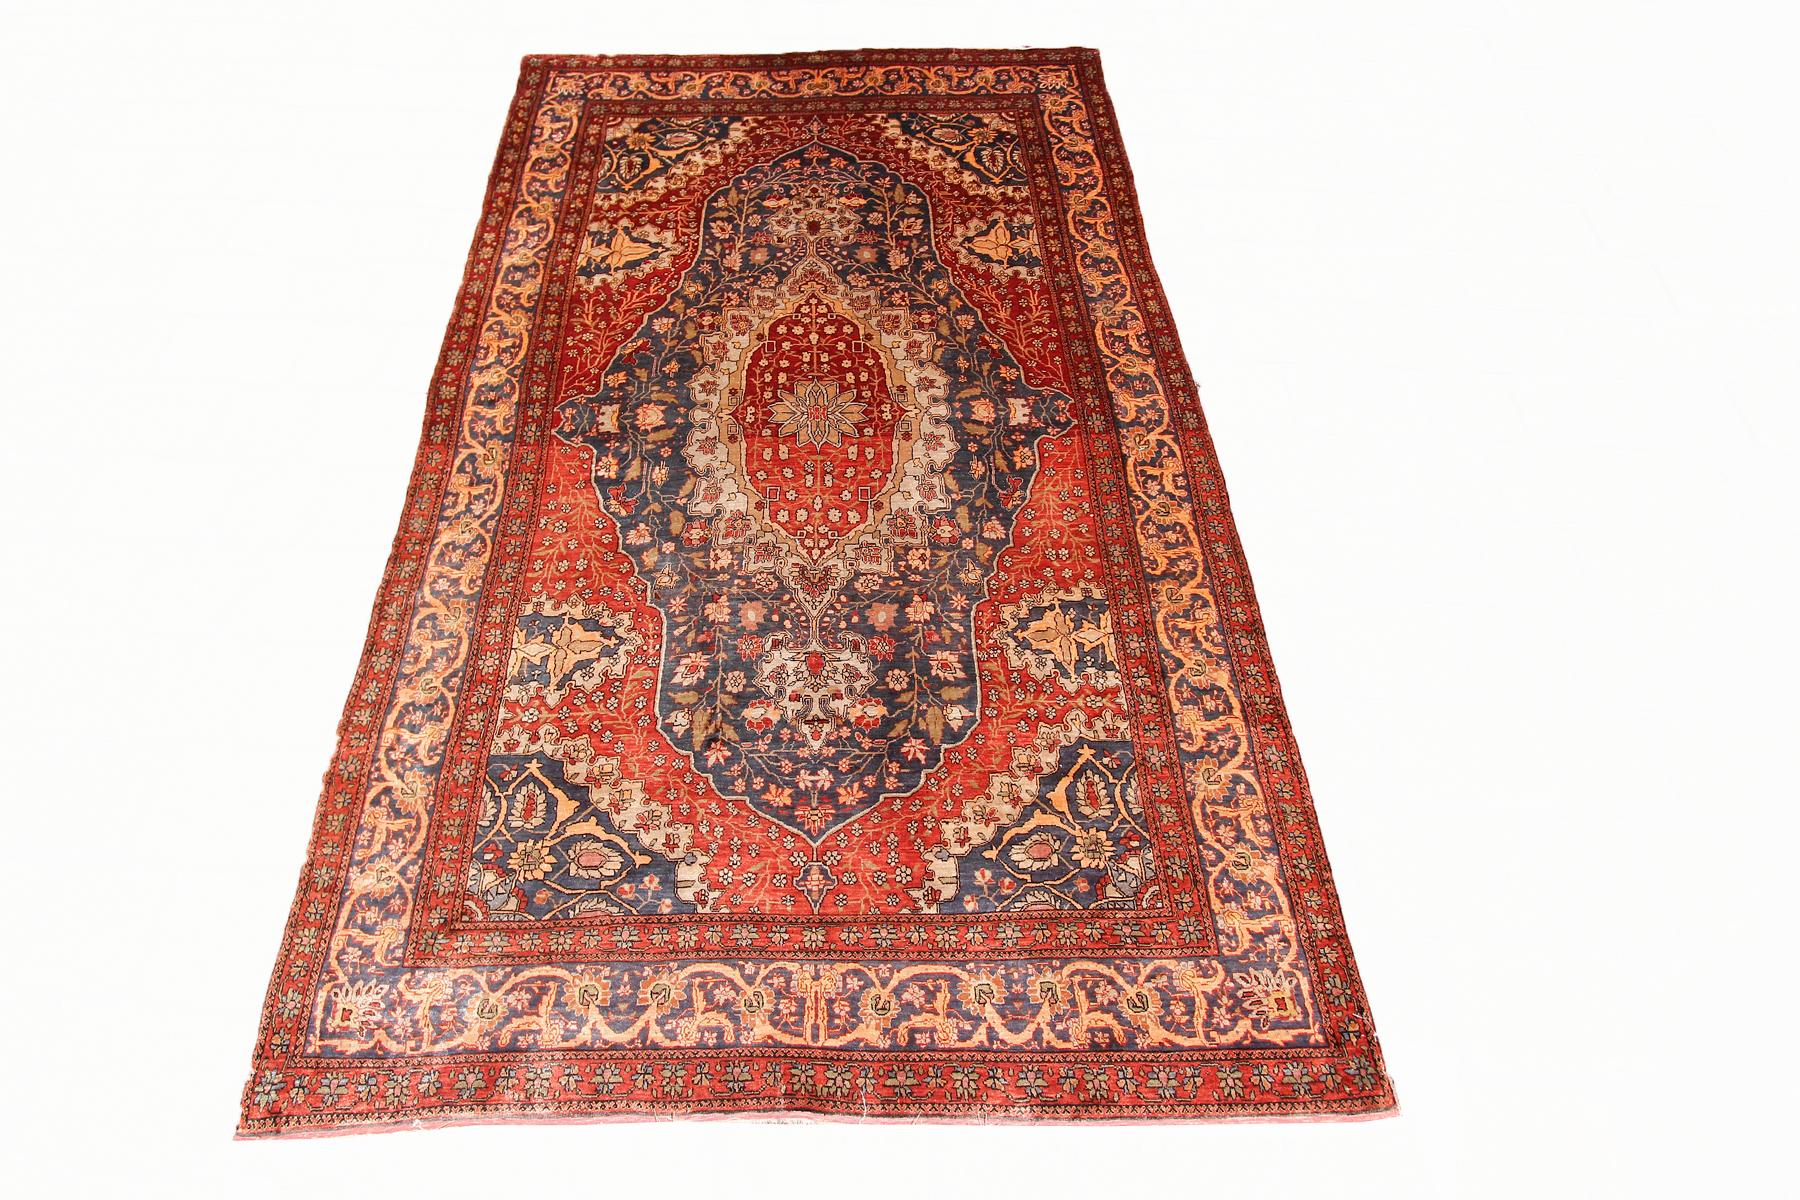 Museum quality estate rare antique silk Mohtasham rug fine Persian 4'4